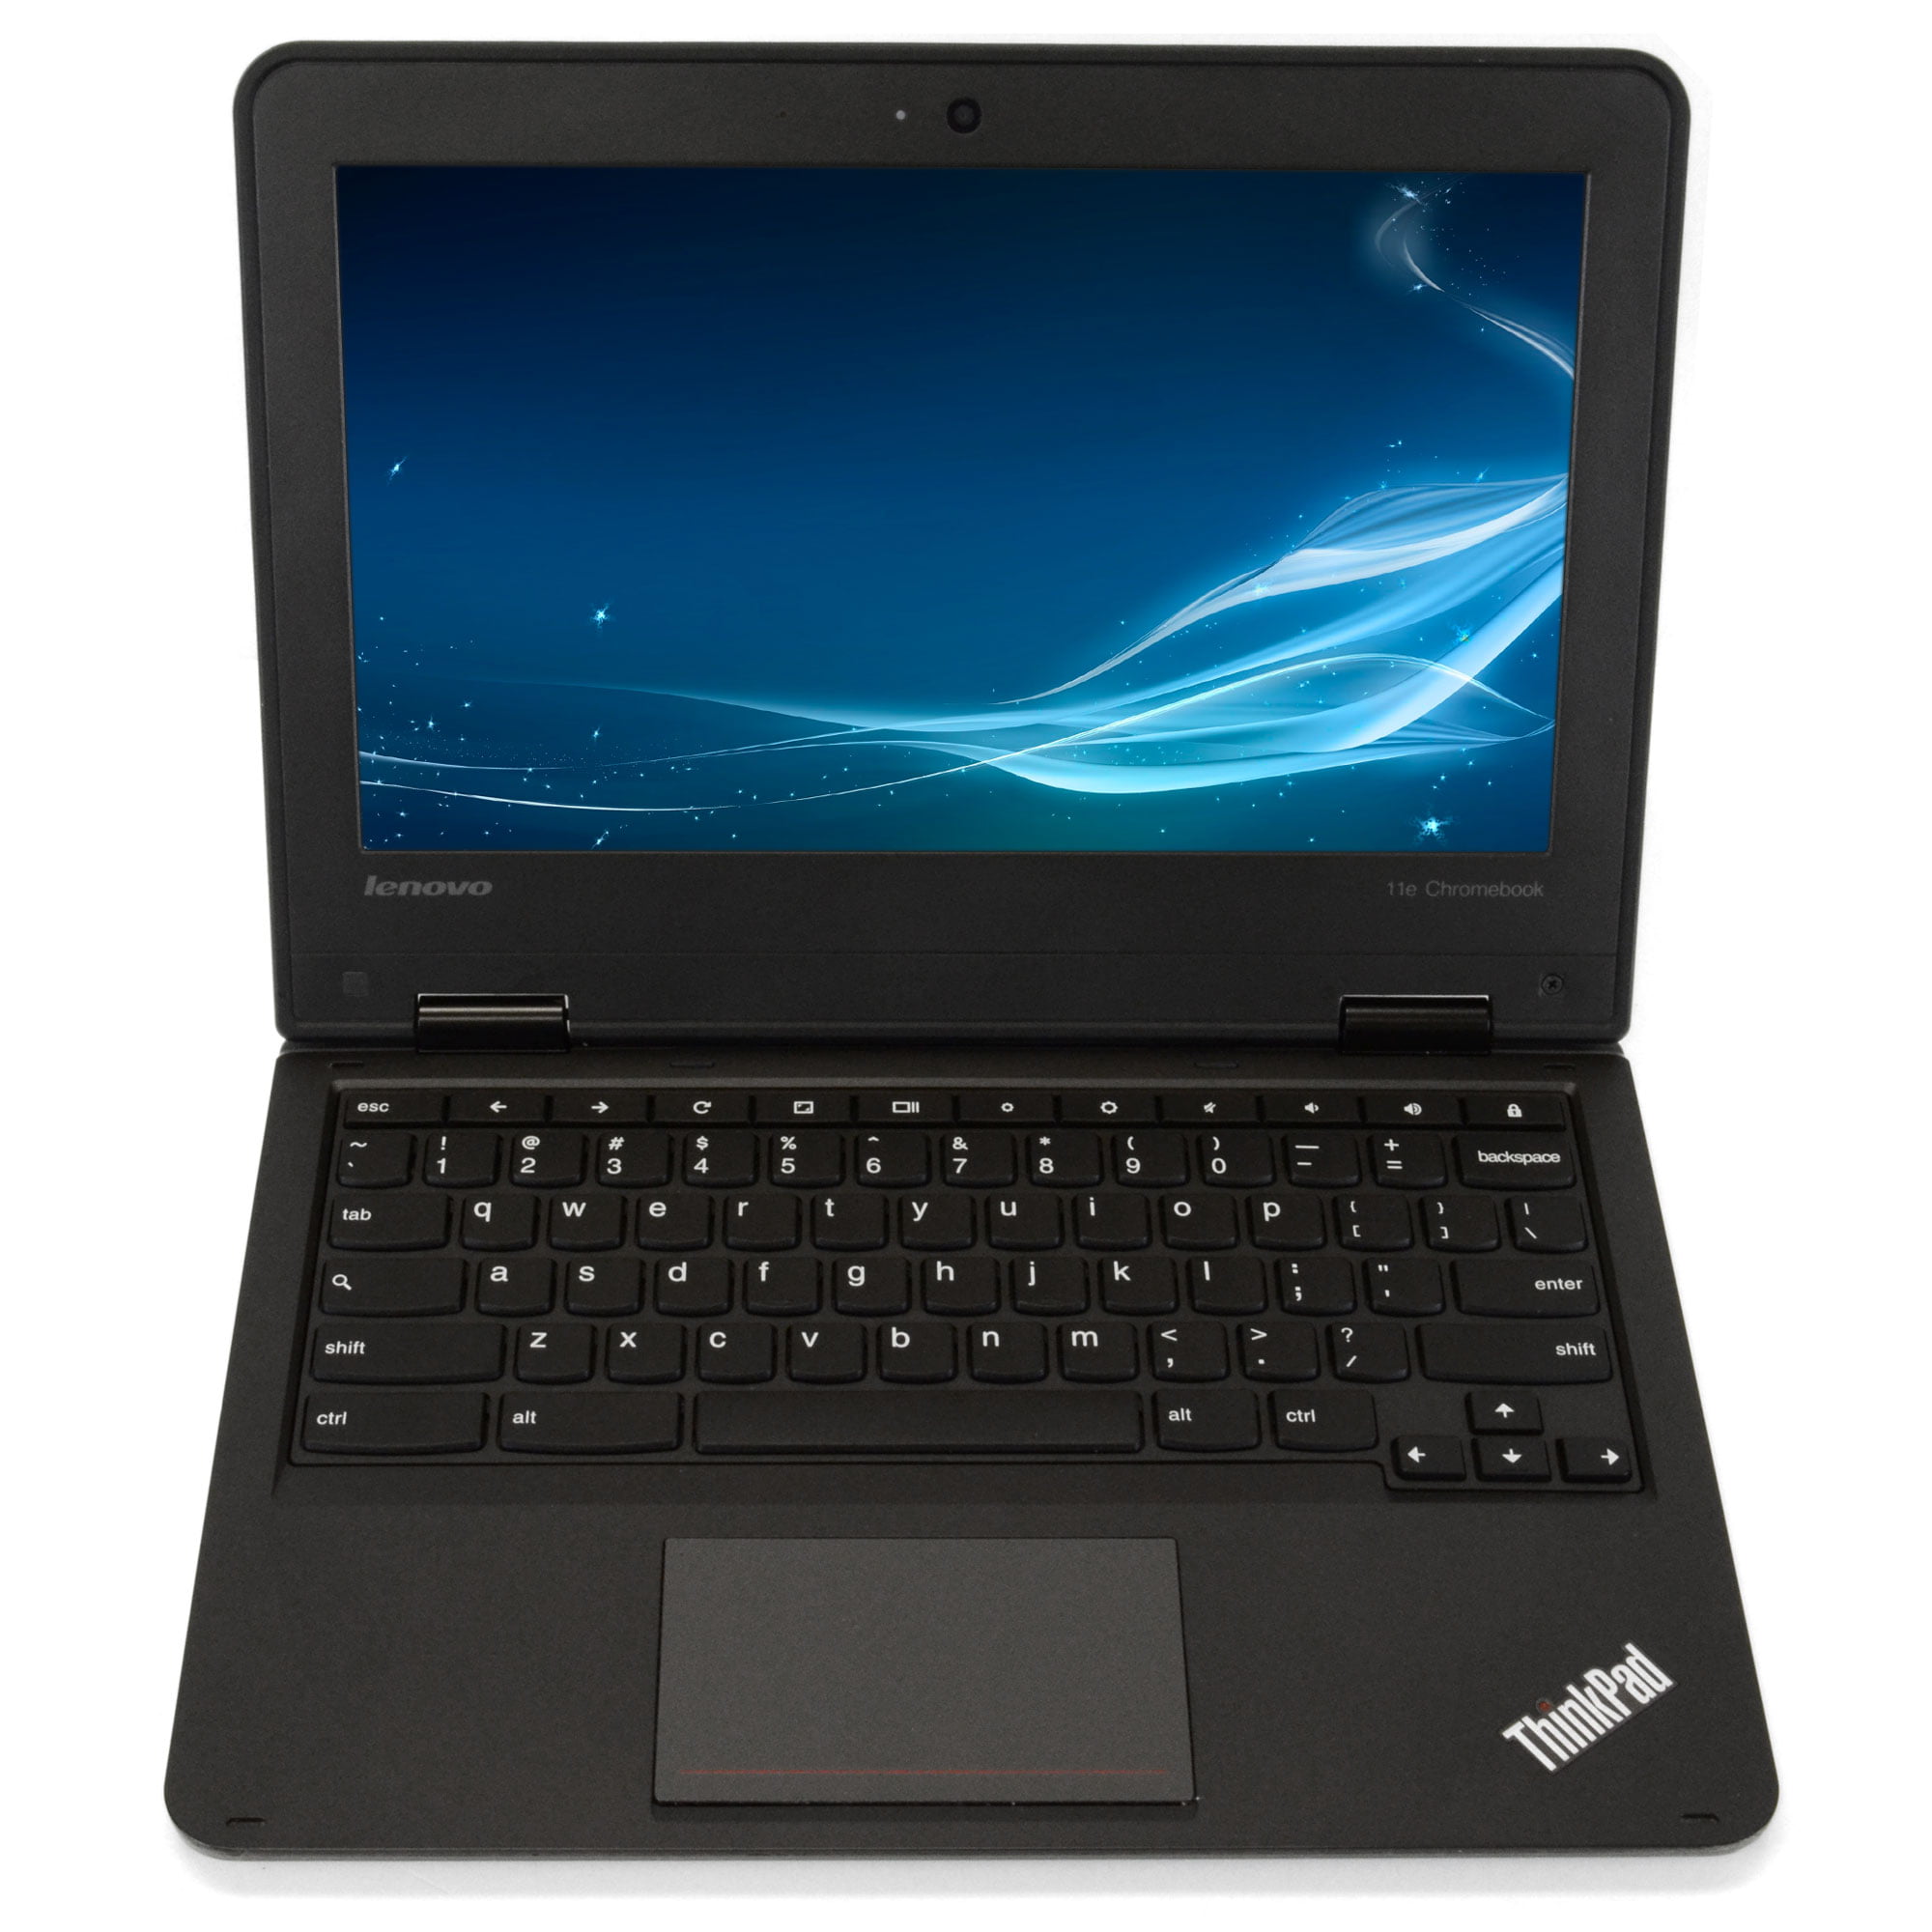 Lenovo ThinkPad 11e Chromebook Laptop Computer,  High Definition  Display, Intel Quad-Quad Processor, 4GB RAM, 16GB Solid State Drive, Chrome  OS, WiFi 